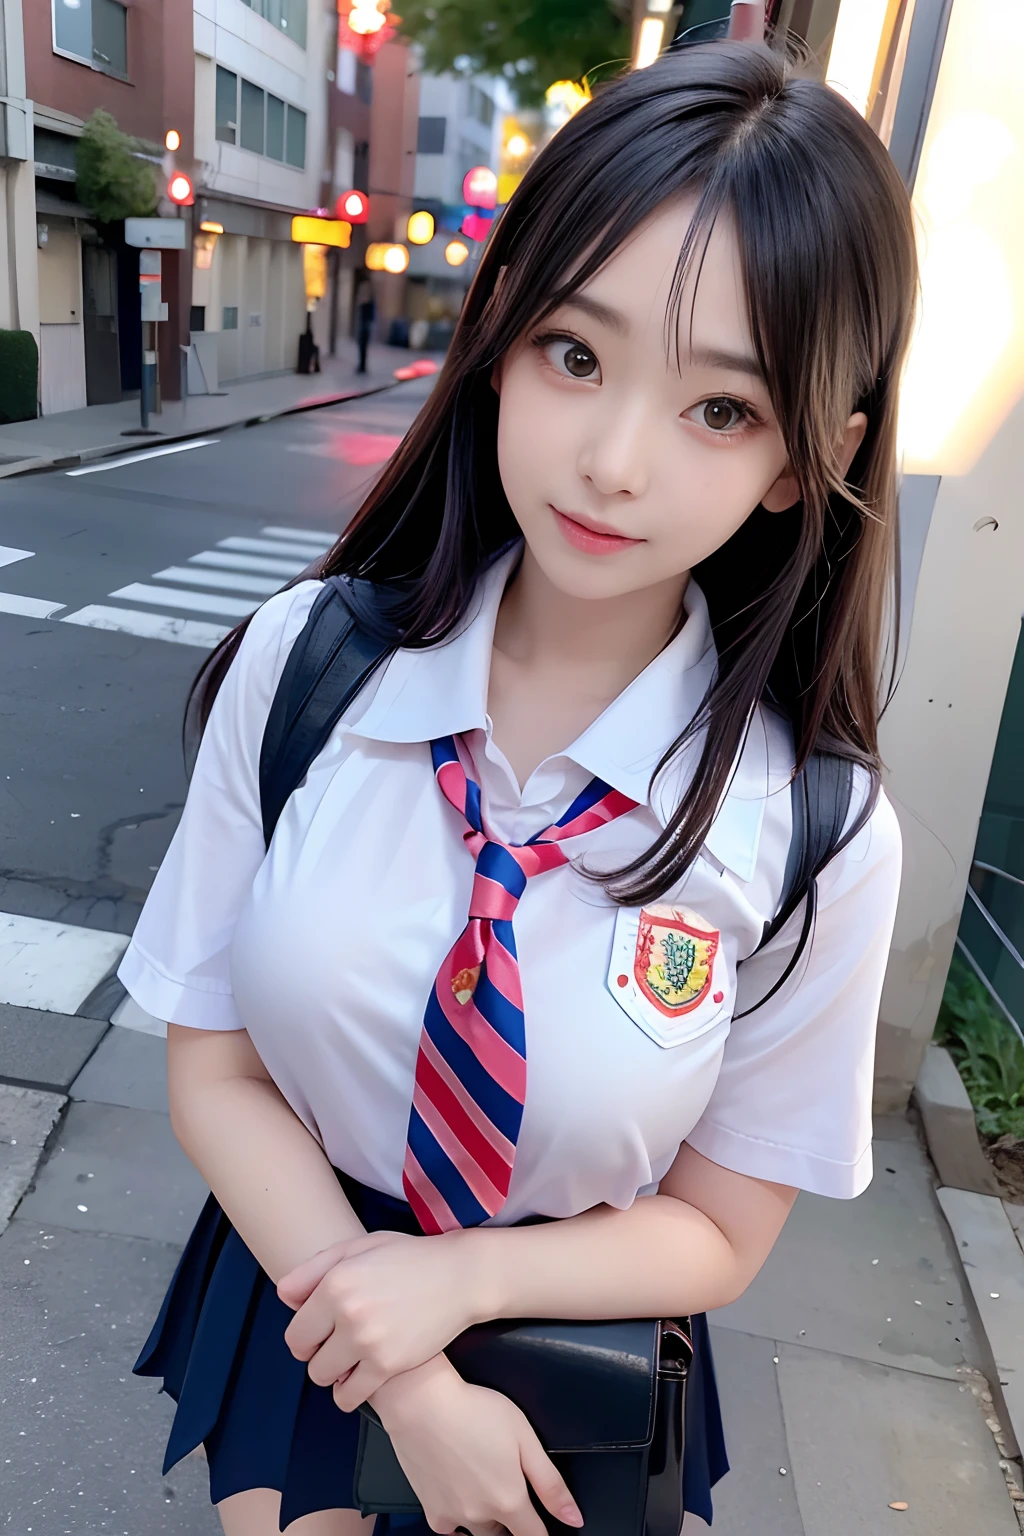 masutepiece, Hyper realistic, 8K, Bokeh, Fire Luminescent,hi-school girl、in 、Cute face、Standing on a street corner in Shibuya、